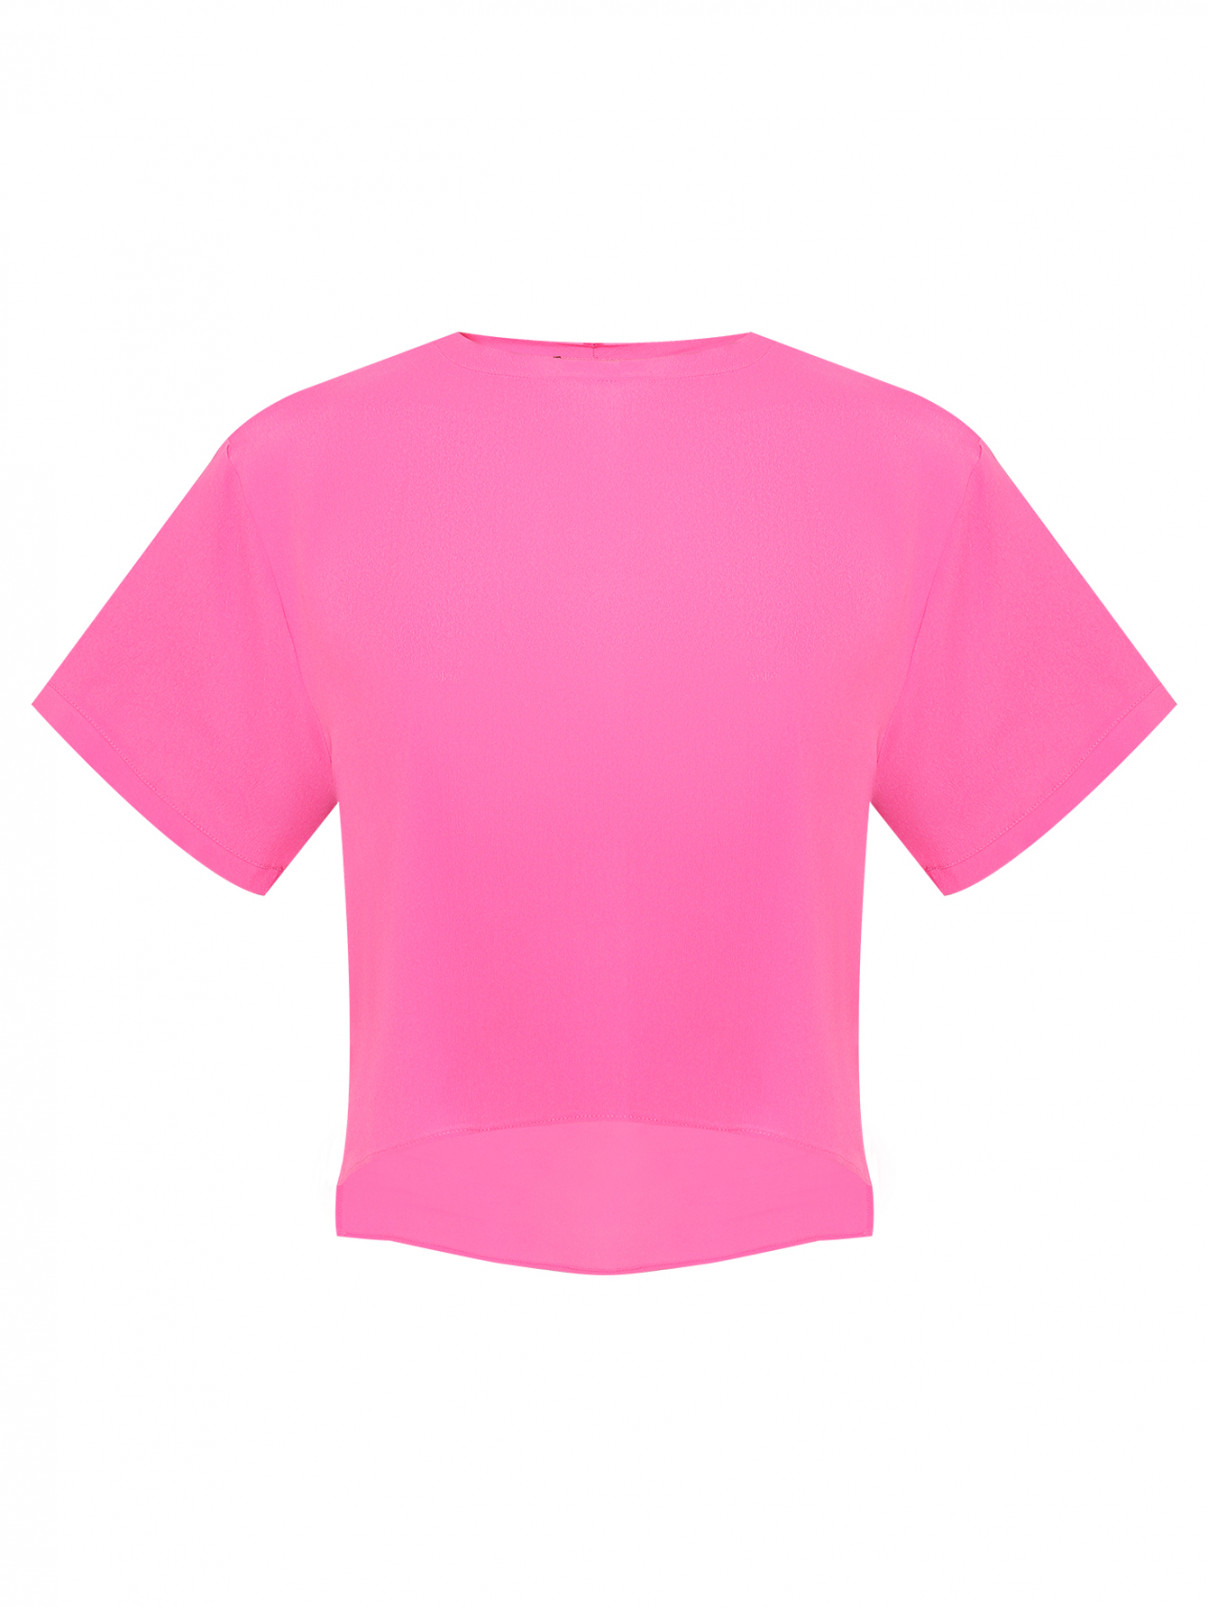 Блуза с короткими рукавами Max&Co  –  Общий вид  – Цвет:  Розовый